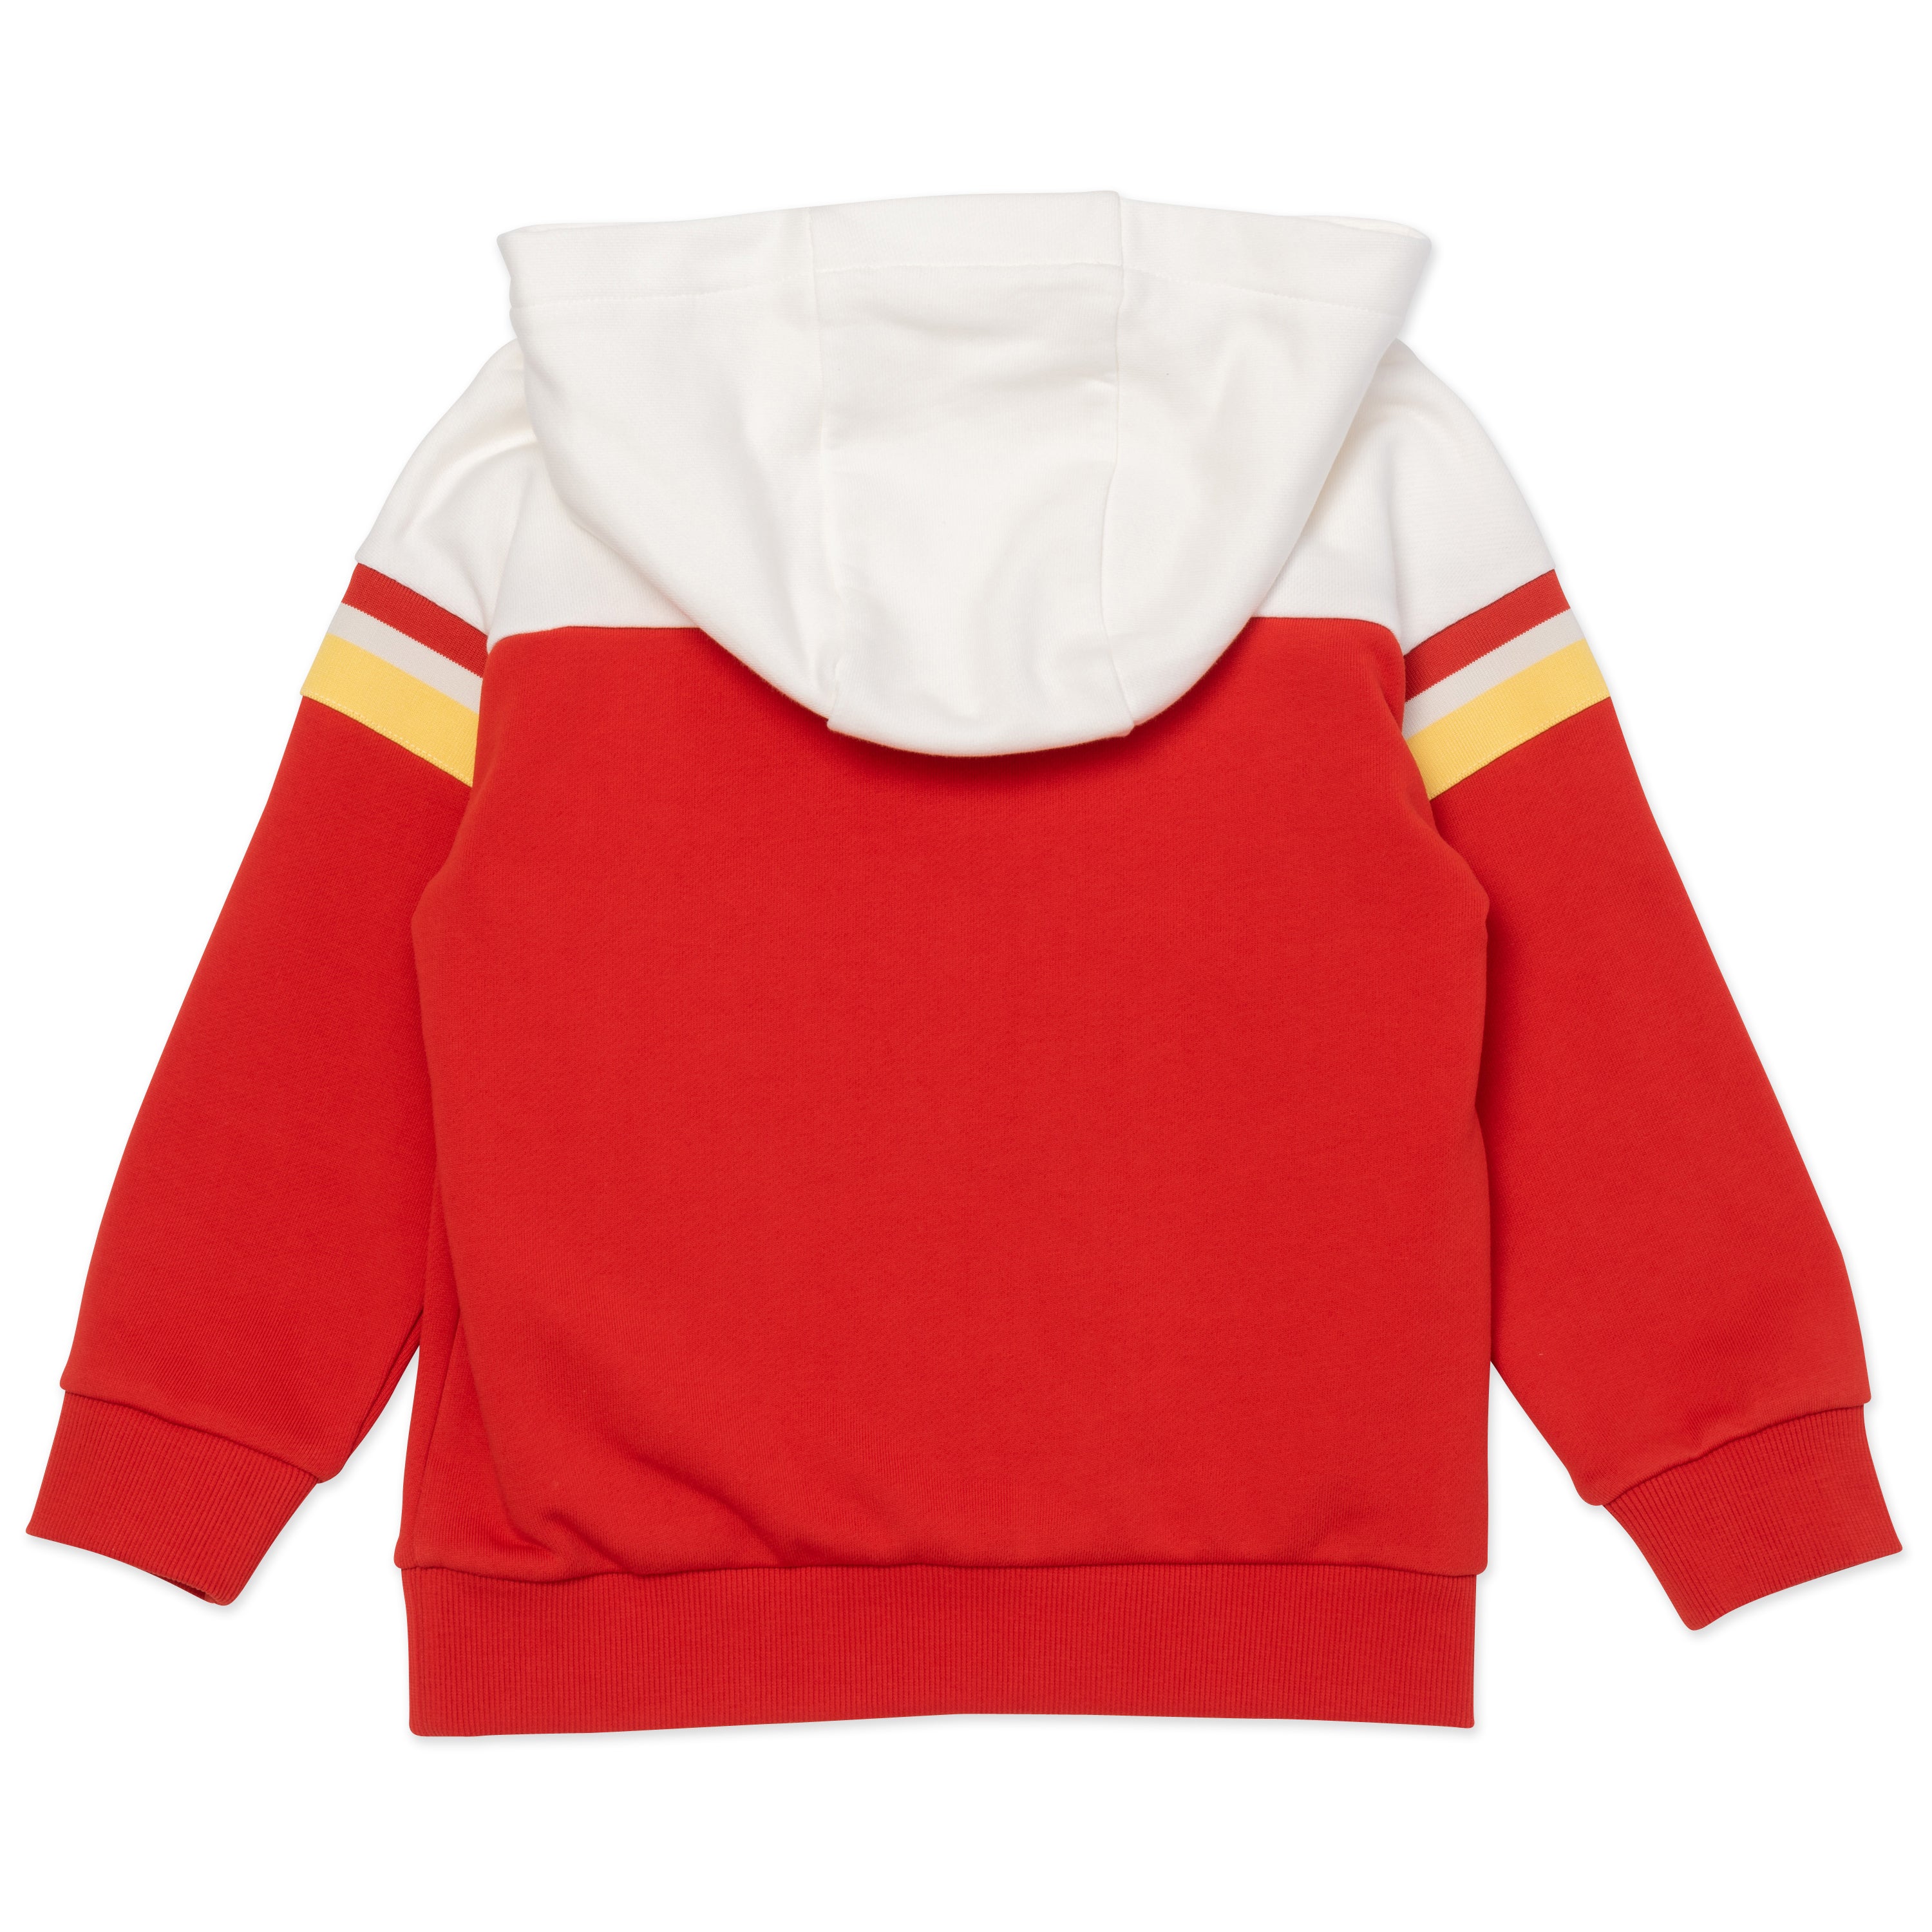 Boys Red Printing Hooded Cotton Sweatshirt